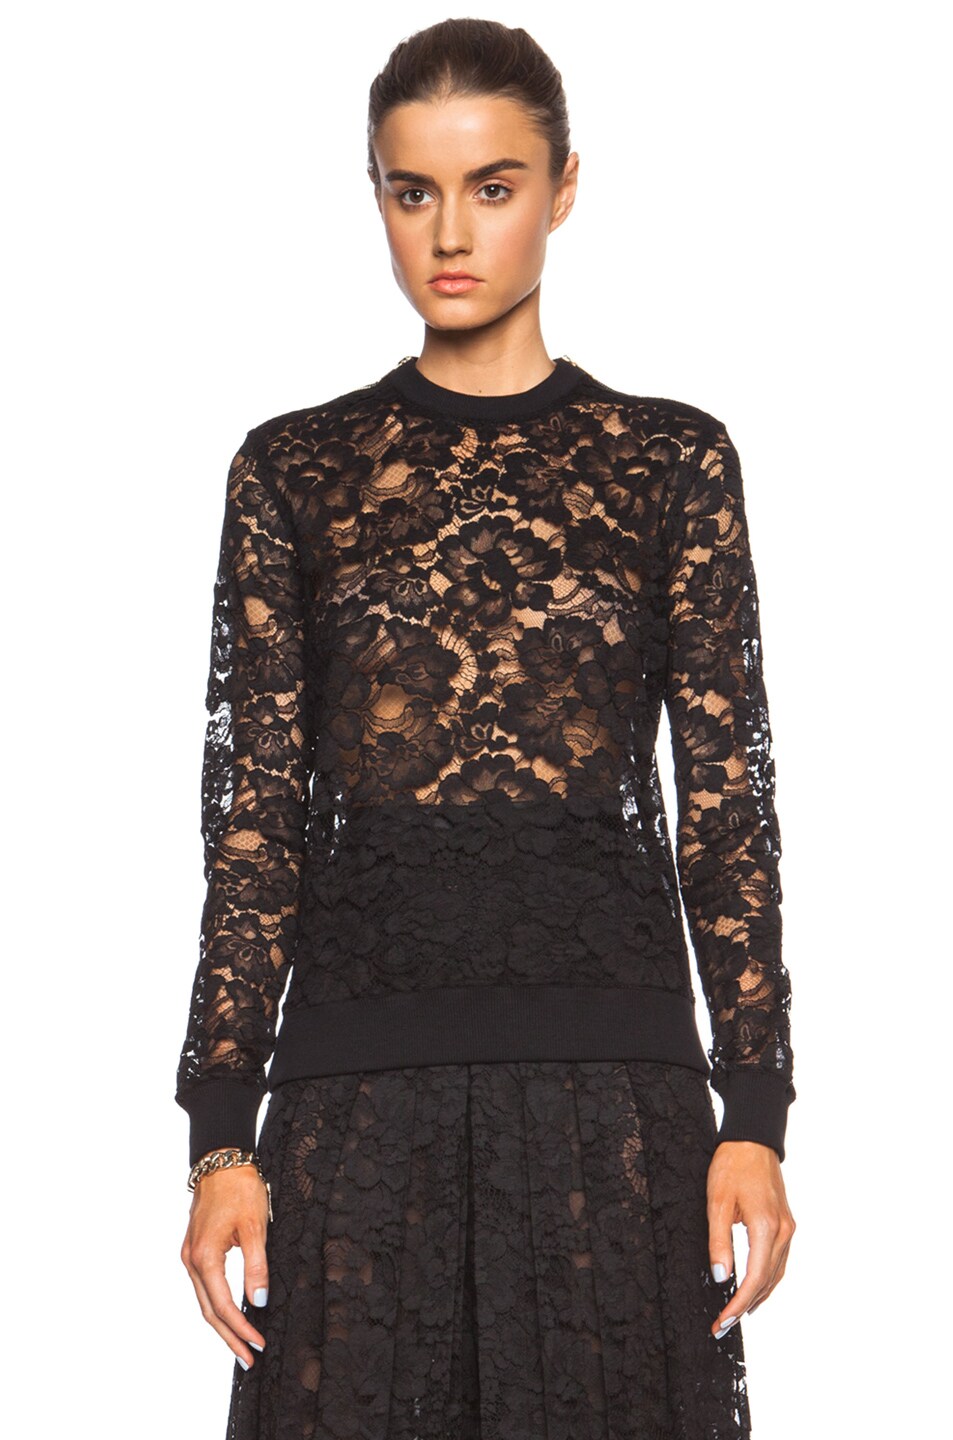 Givenchy Lace Sweatshirt in Black | FWRD